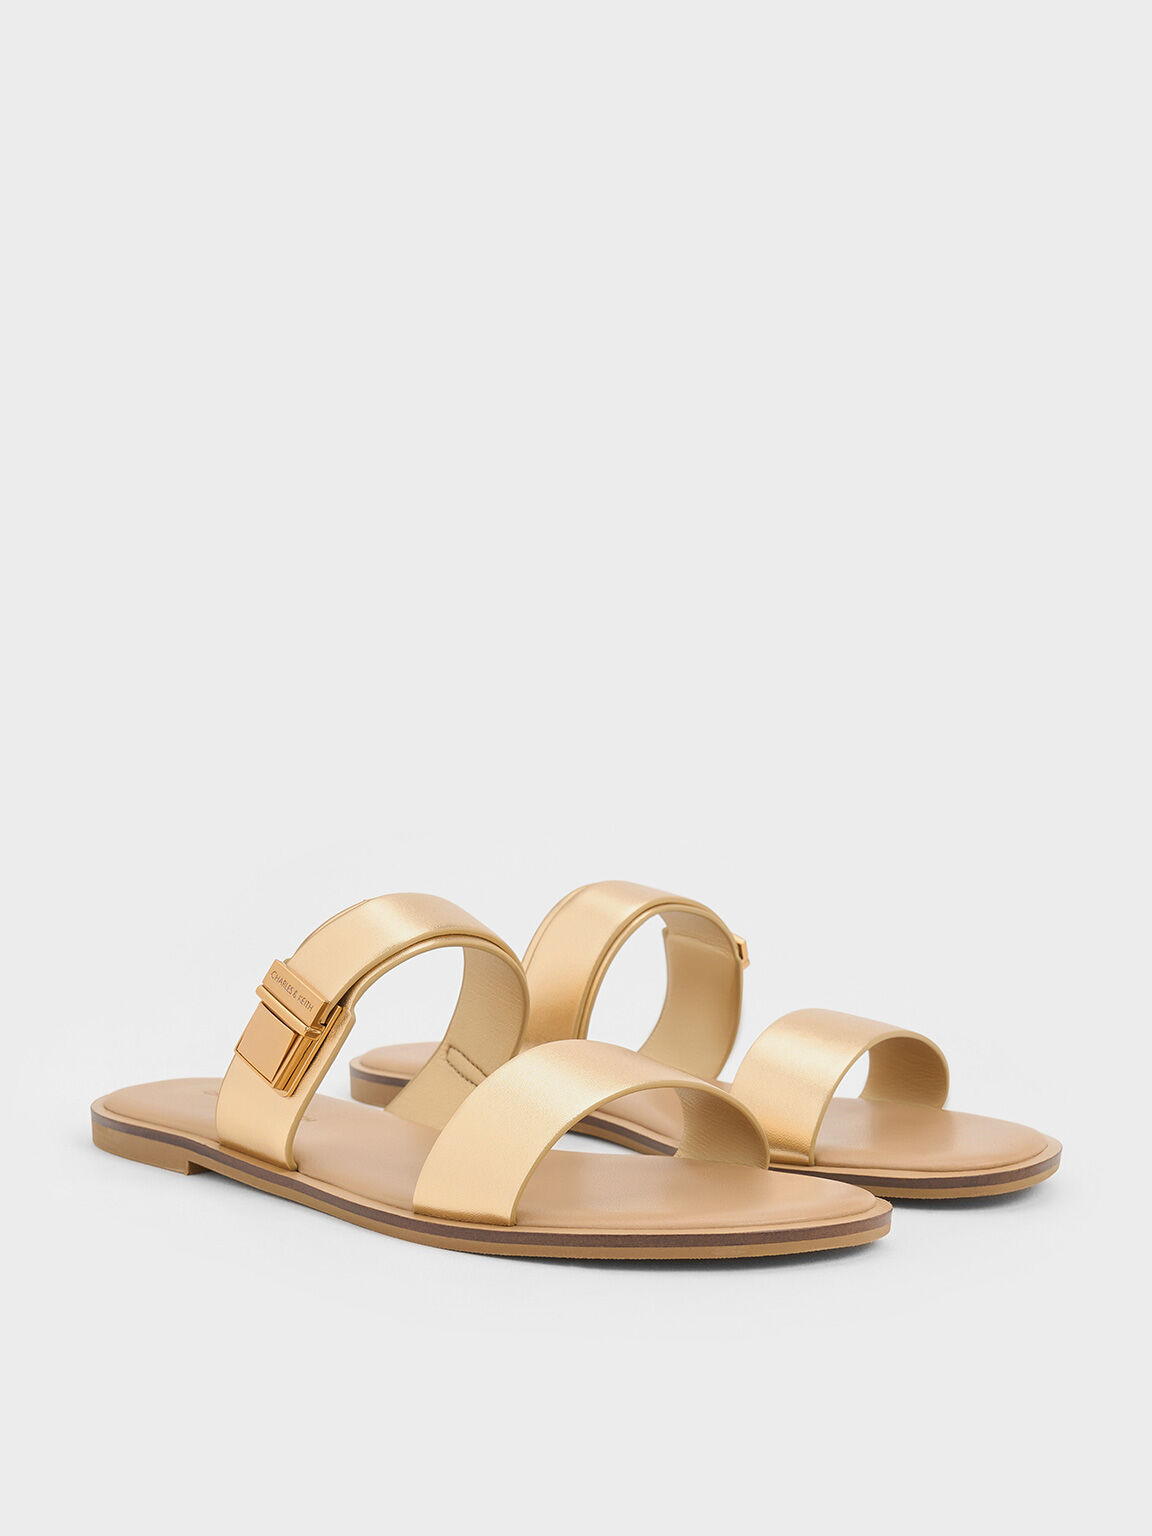 Dove Metallic Double-Strap Sandals, Gold, hi-res